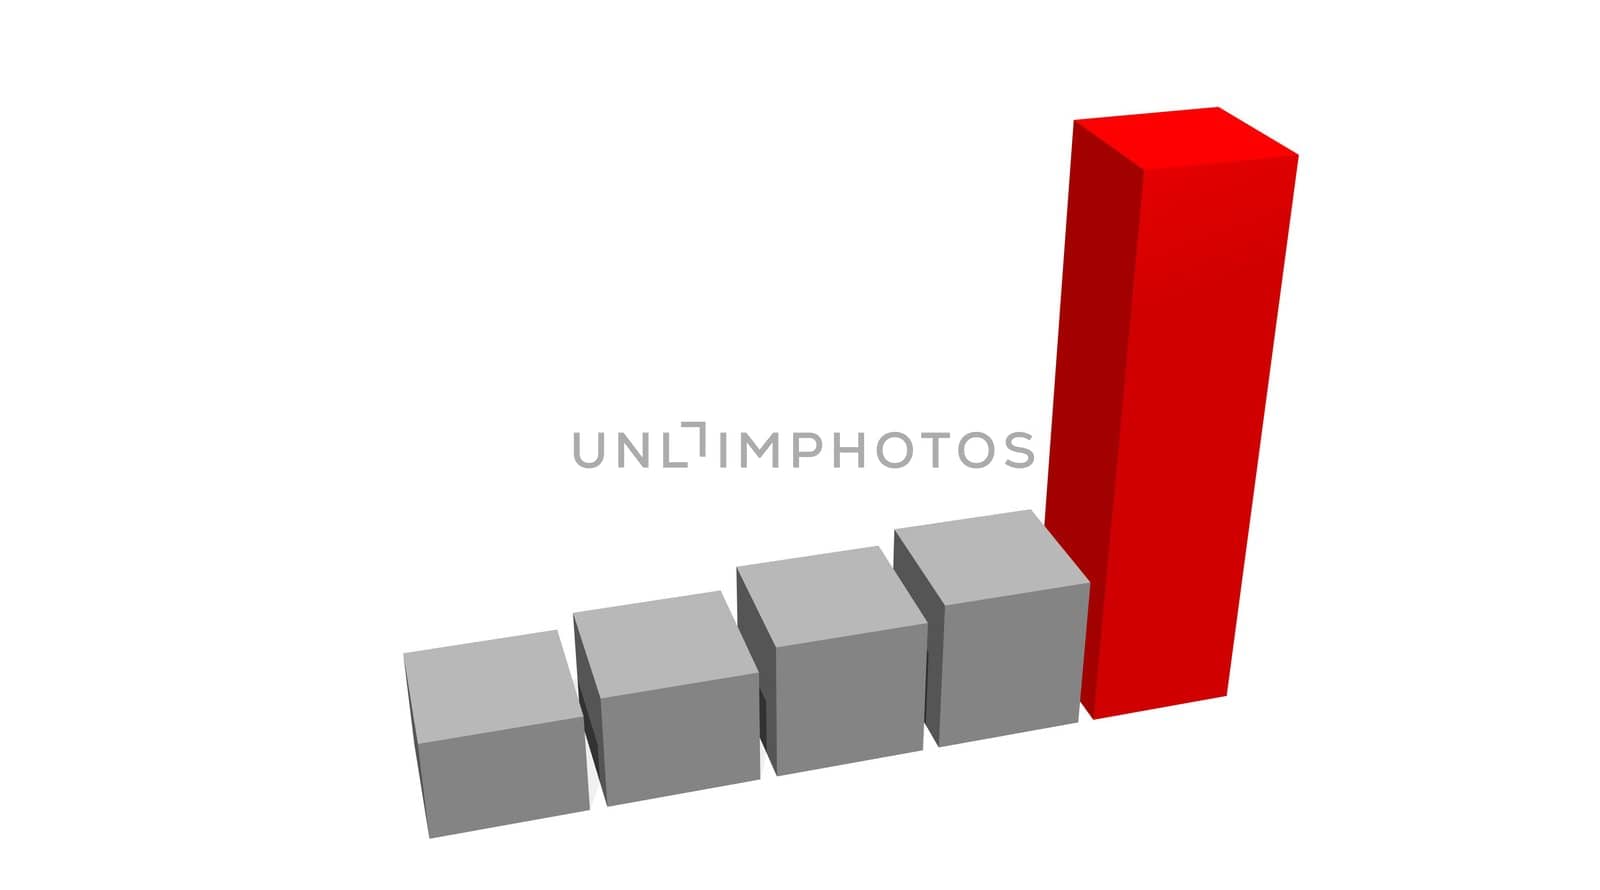 Red progress bar in statistics histogram in white background